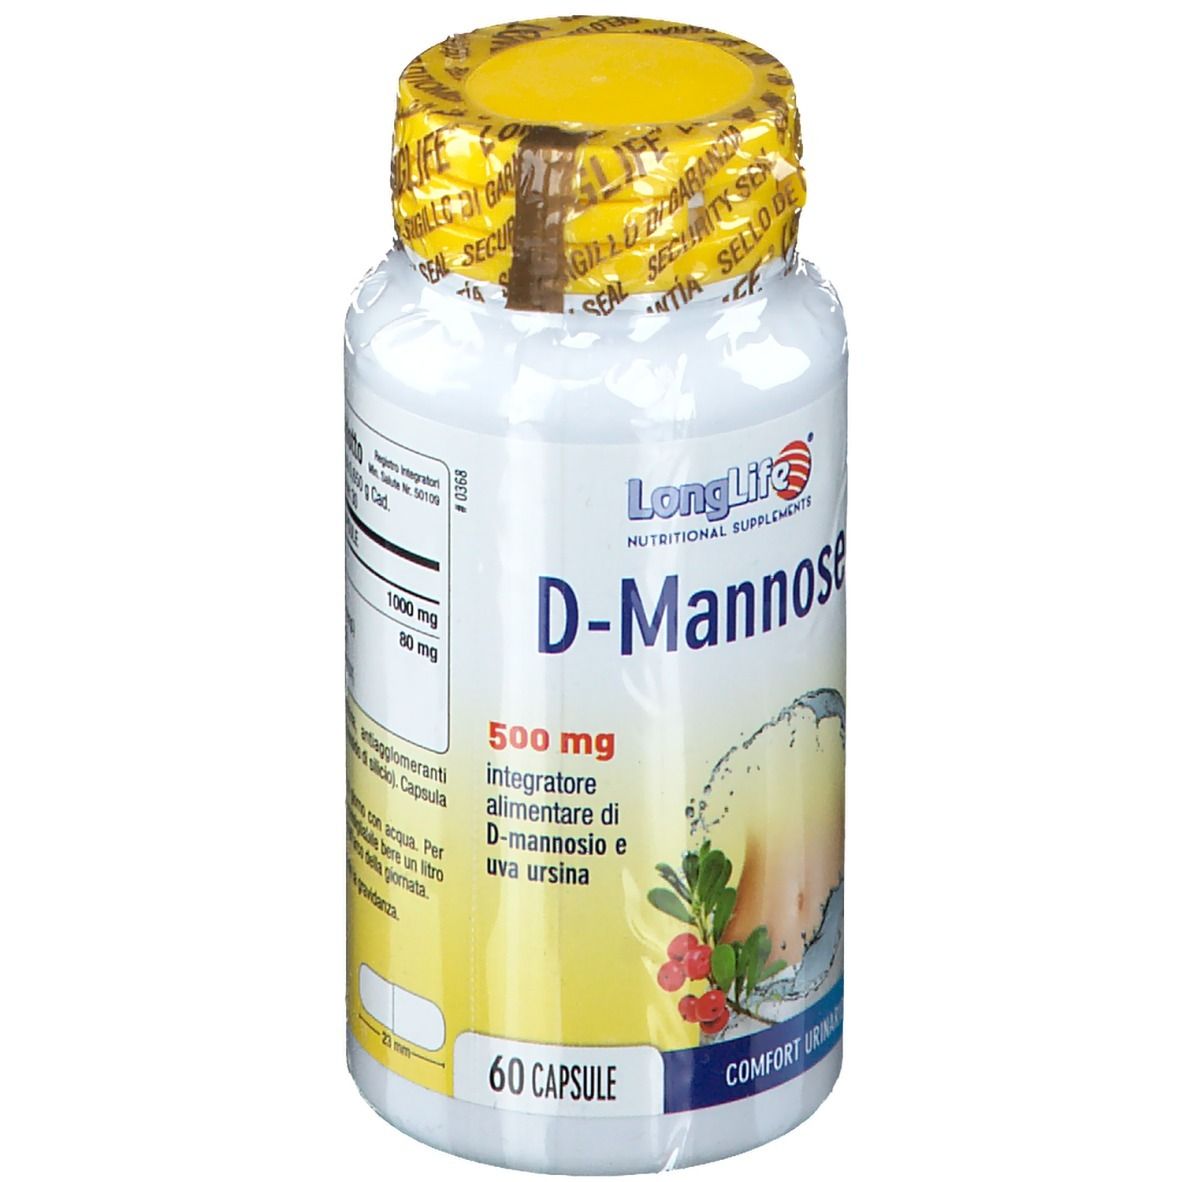 LongLife® D-Mannose